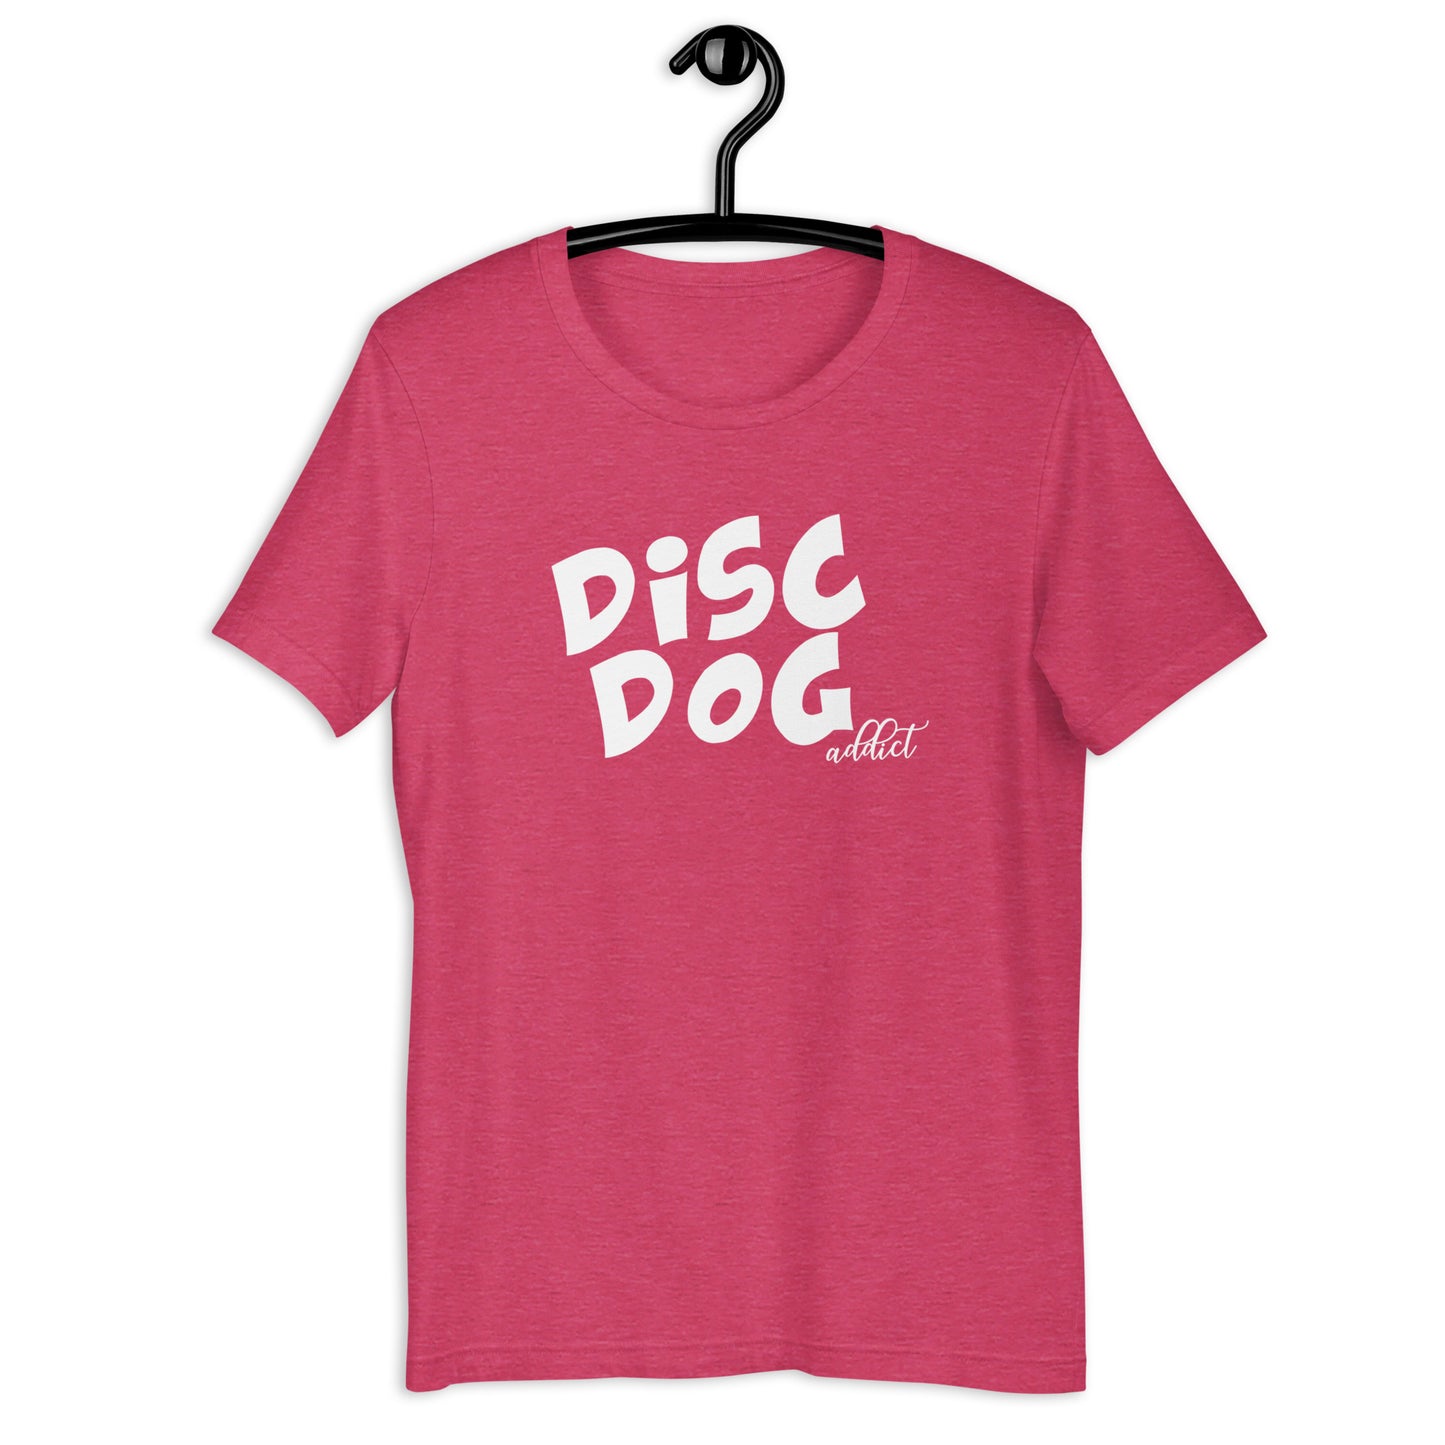 DICS DOG ADDICT - Unisex t-shirt